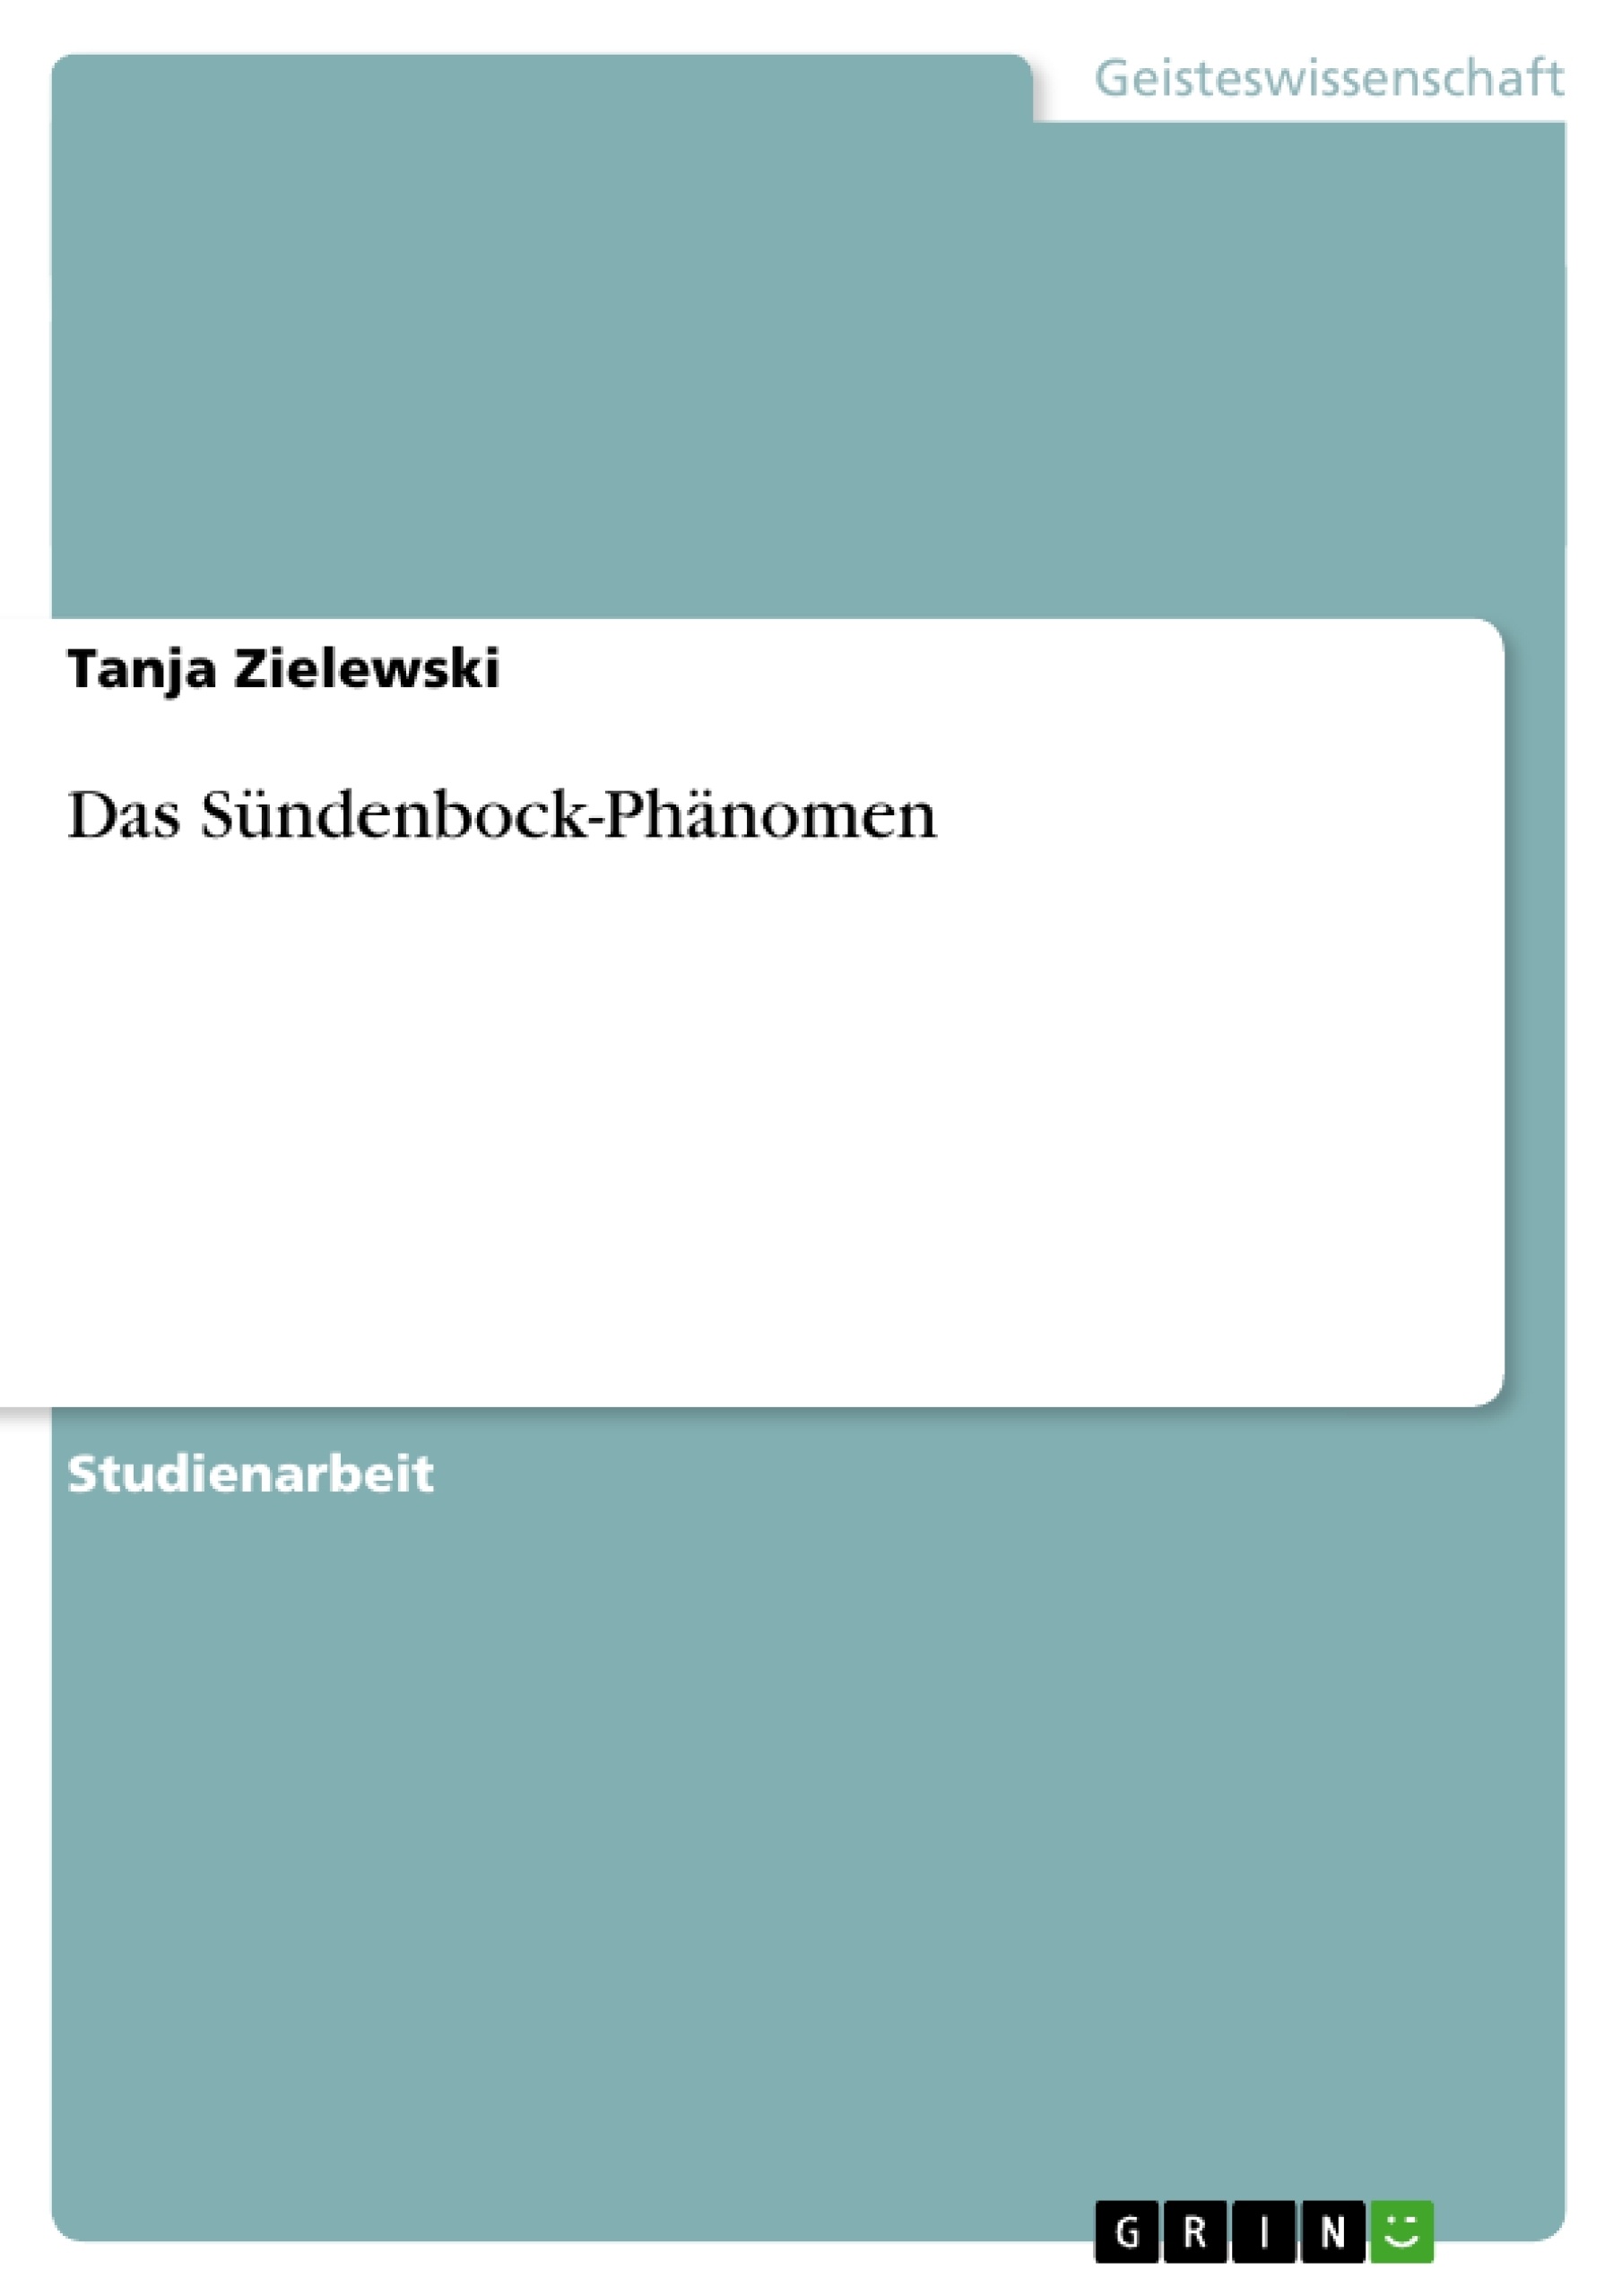 Titre: Das Sündenbock-Phänomen